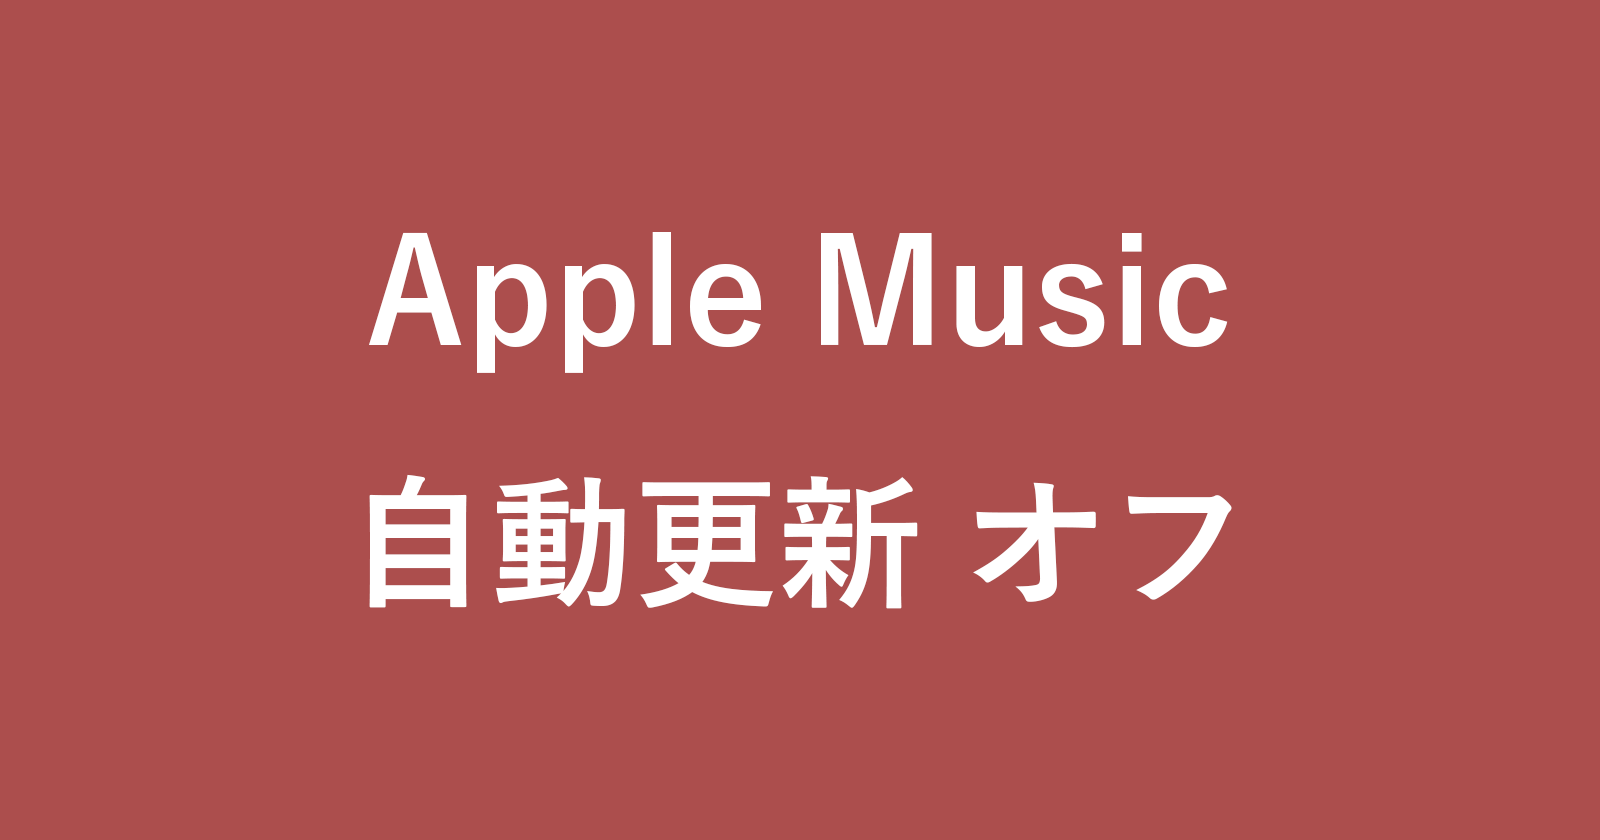 apple music subscription